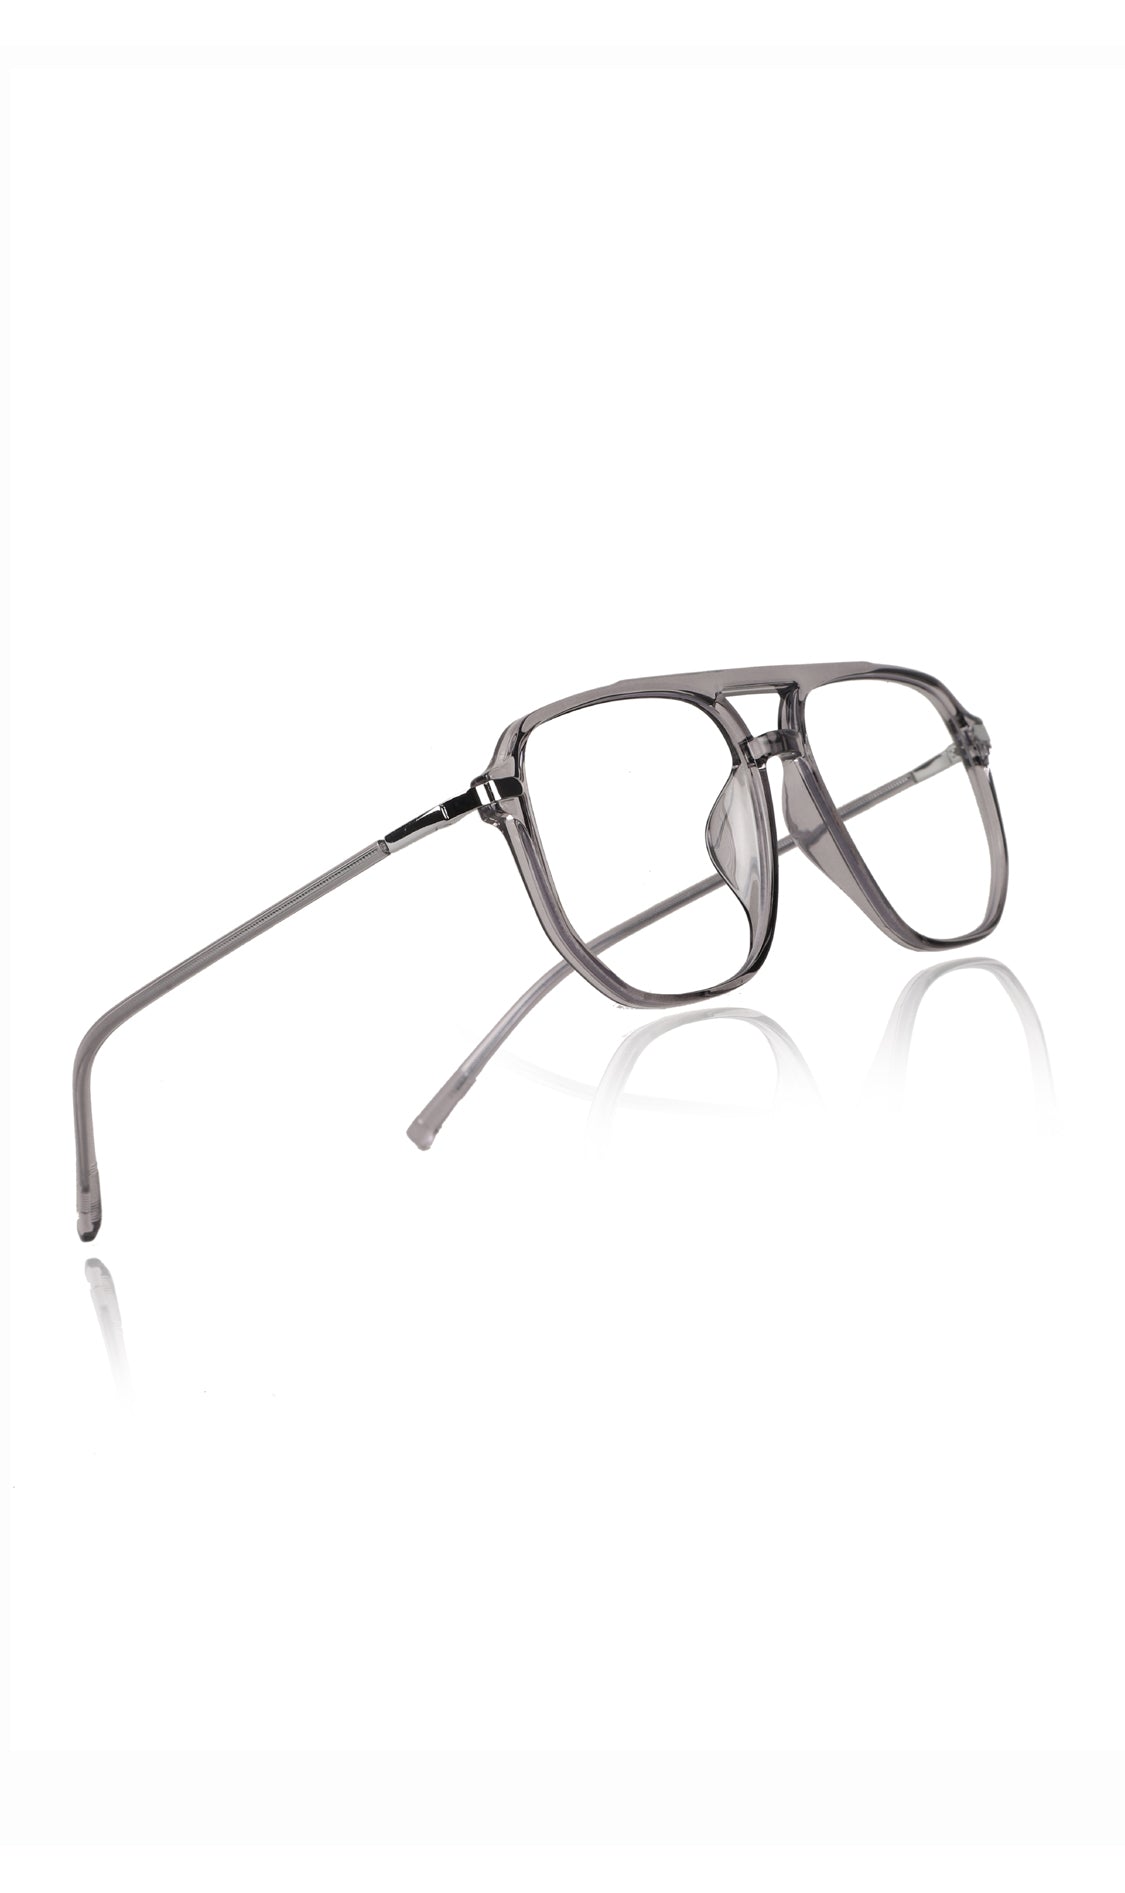 Jodykoes® Premium Oversized Eyeglass Frames: Stylish Anti-Glare and Blue Light Blocking Glasses for Enhanced Computer and Mobile Phone Protection, Unisex Design (Grey)